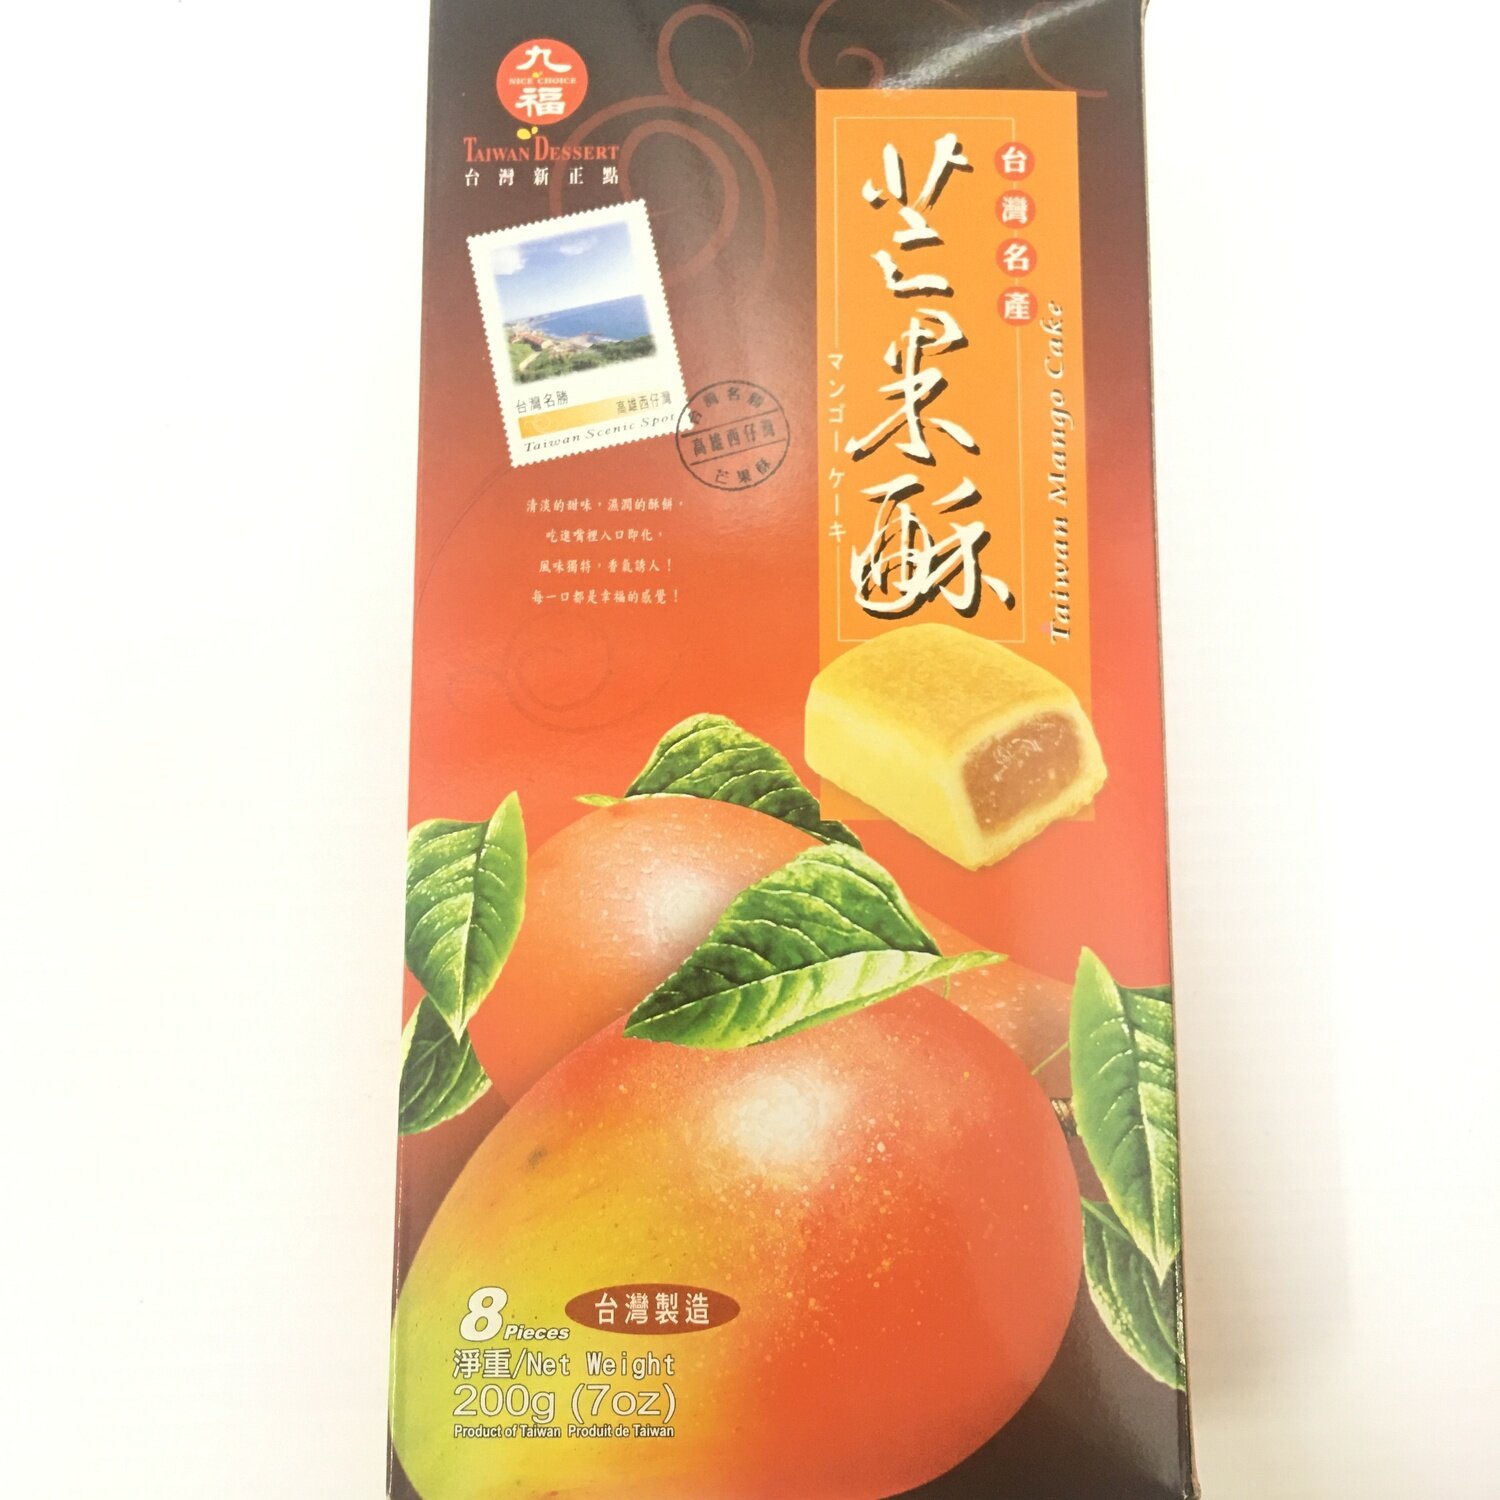 GROC【杂货】九福 芒果酥 200g